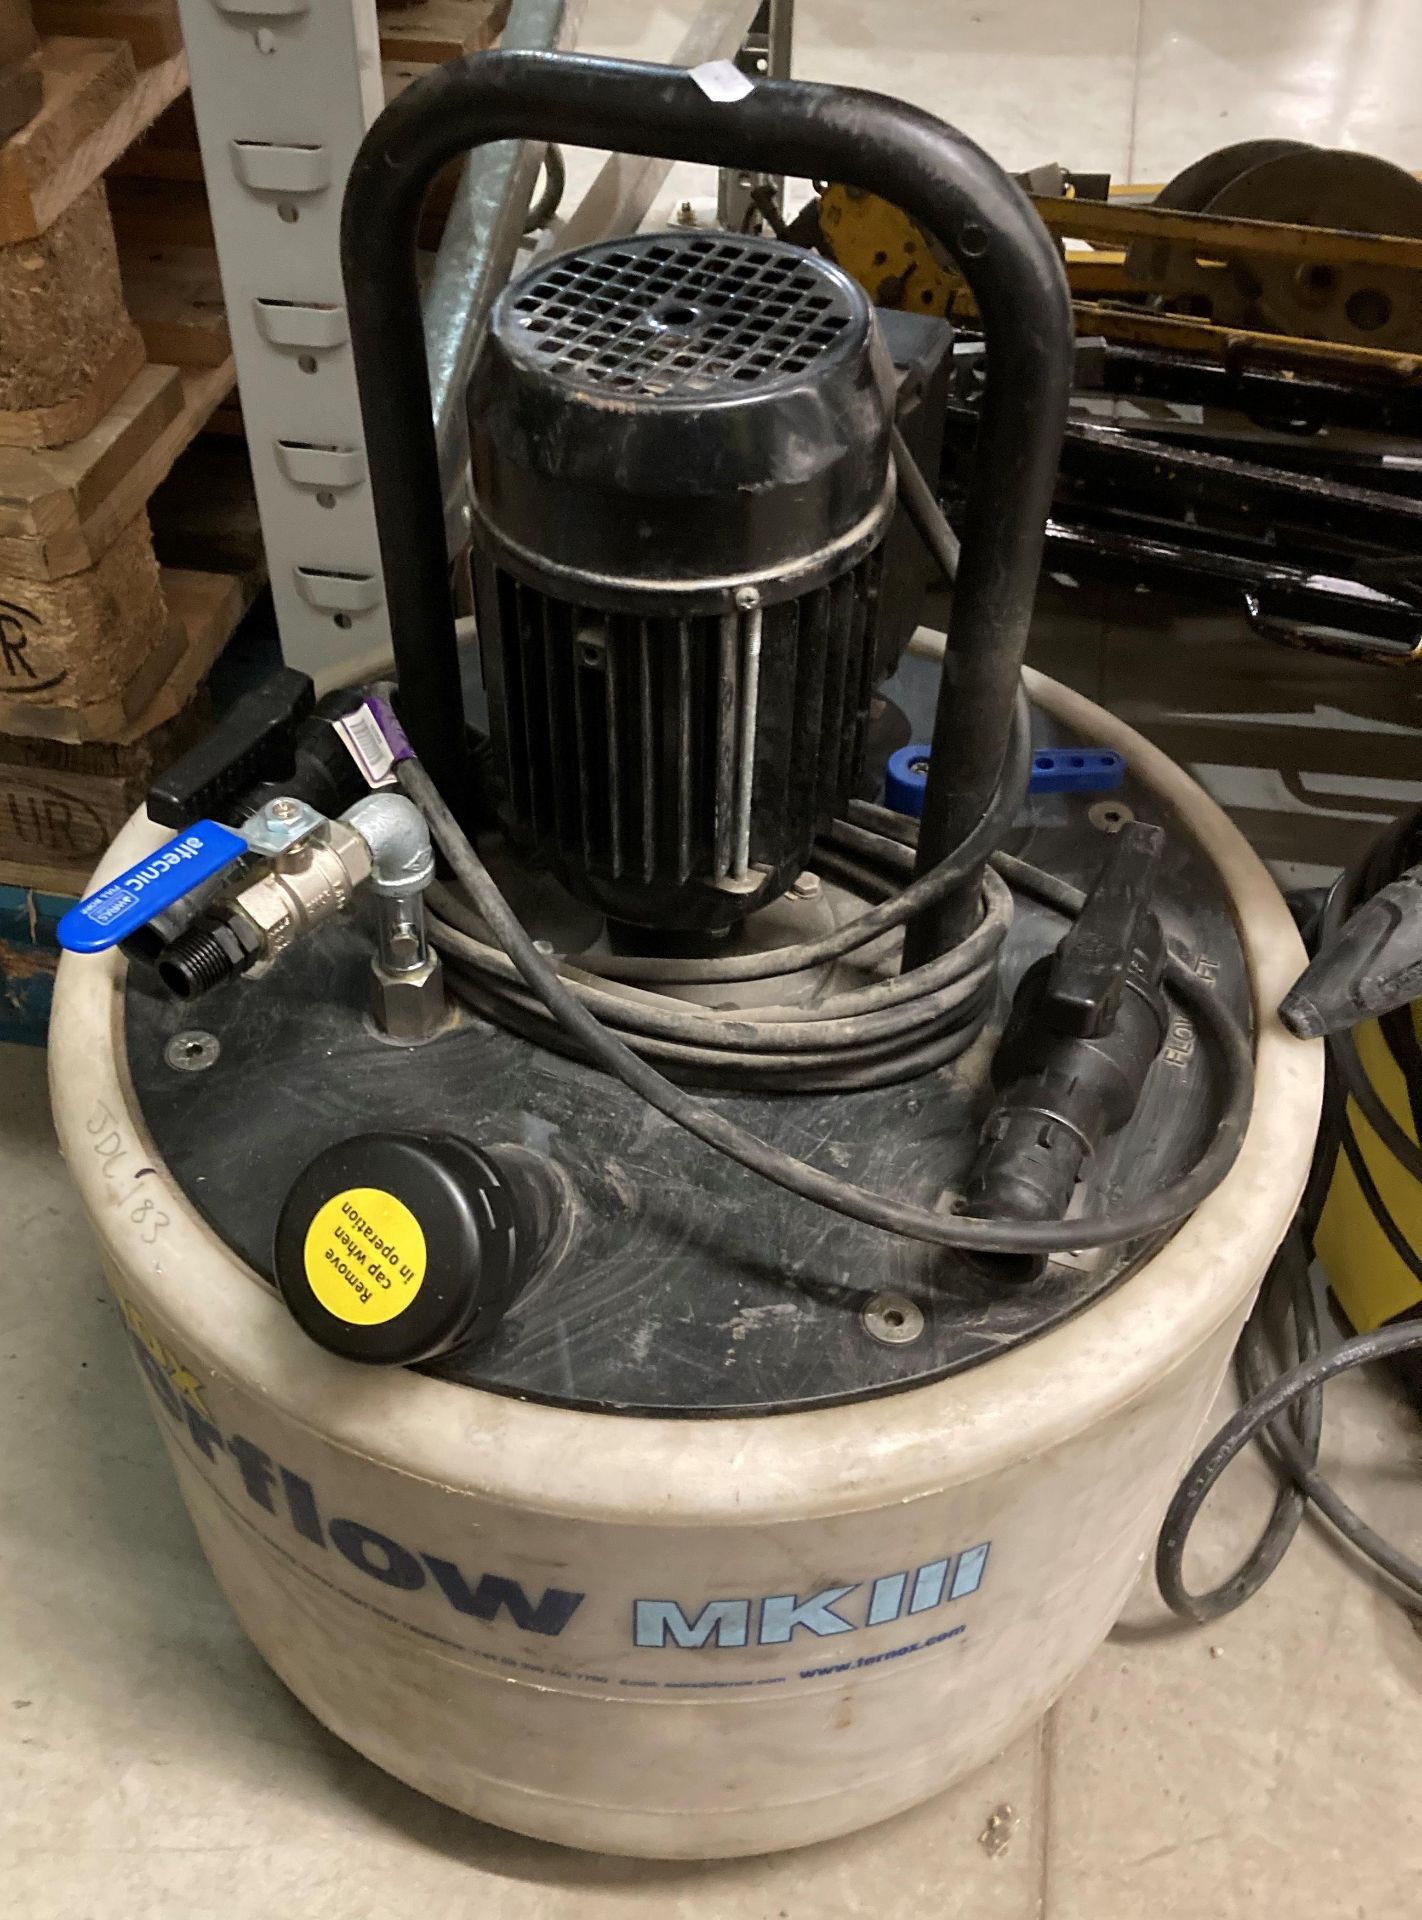 Frenox Powerflow 240v flushing machine (saleroom location: Z01 FLOOR)